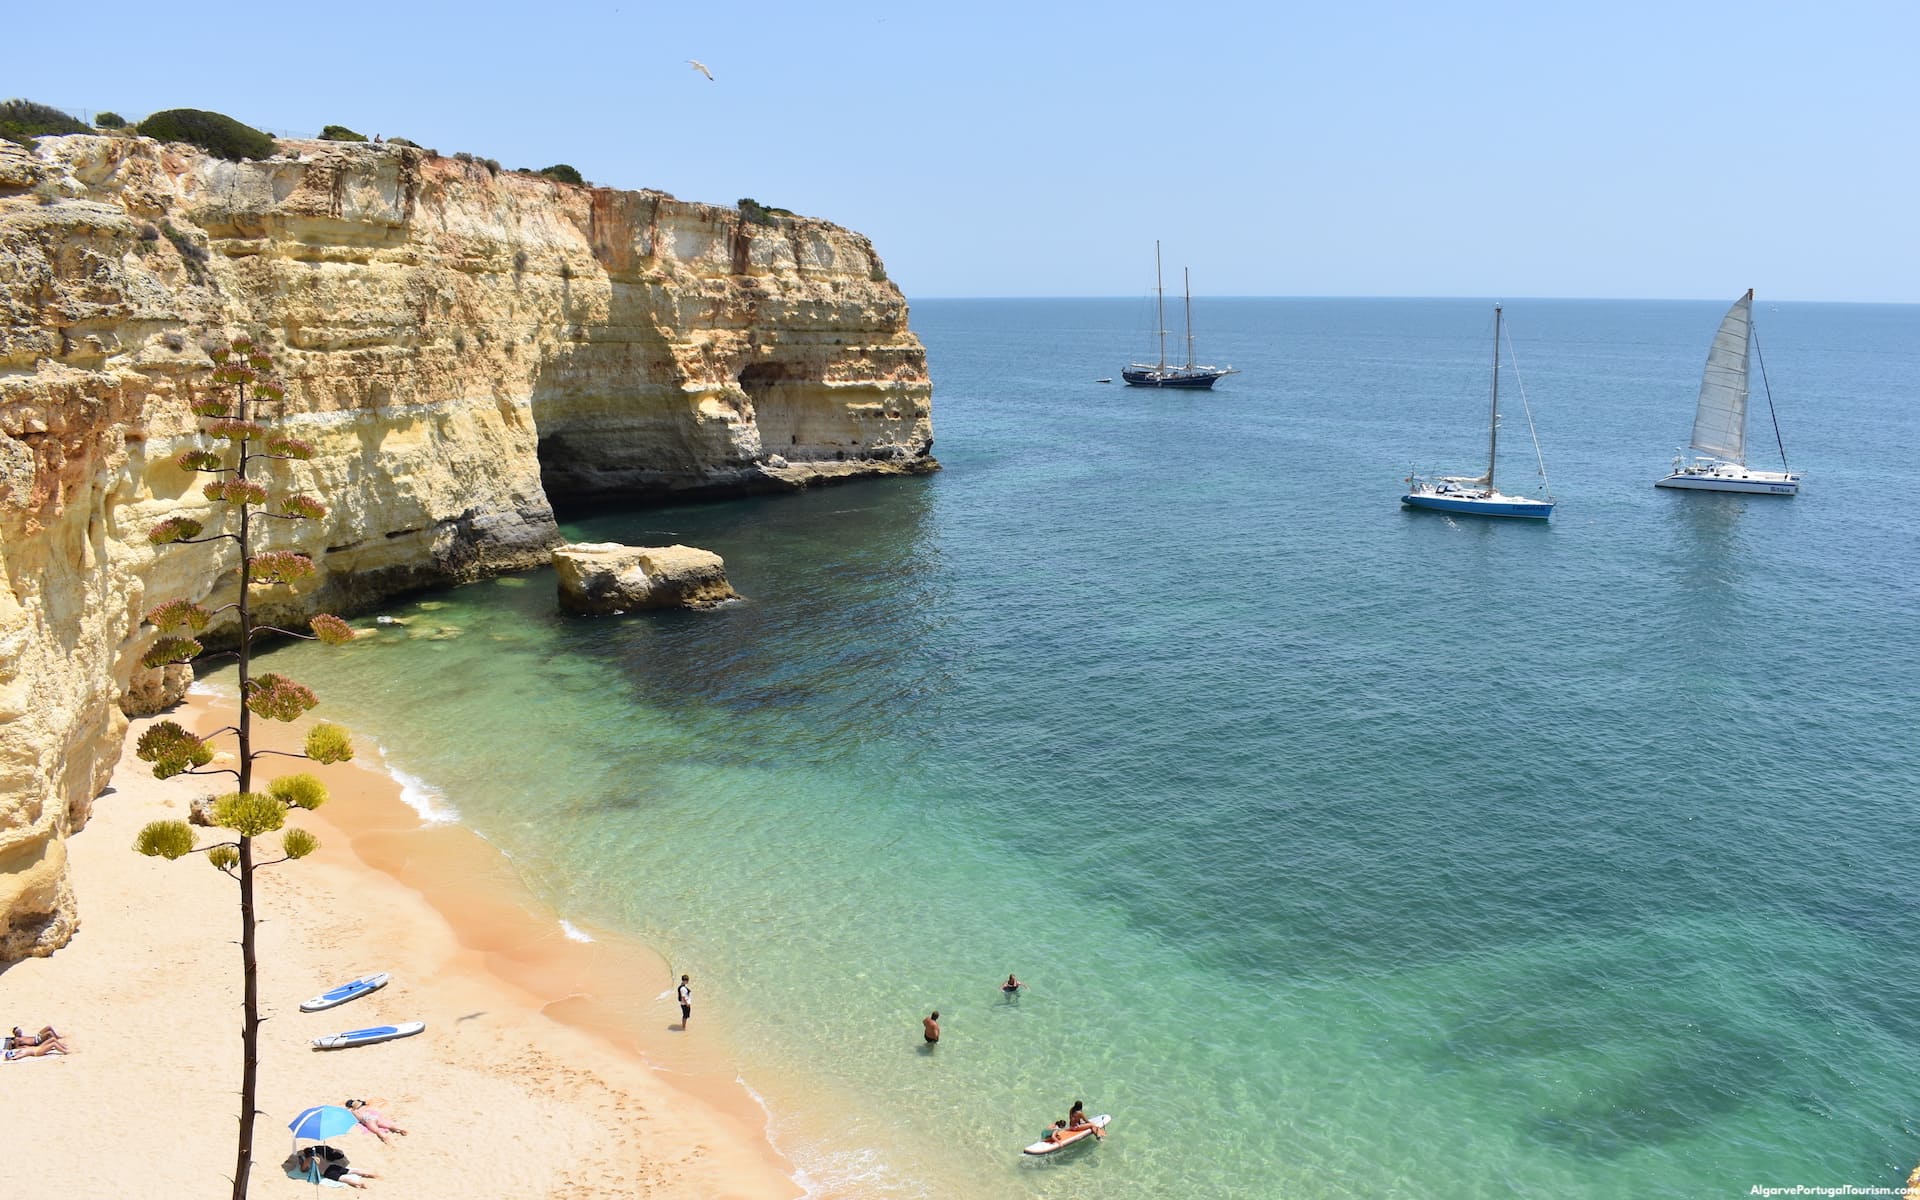 View of a beach in Algarve, Portugal